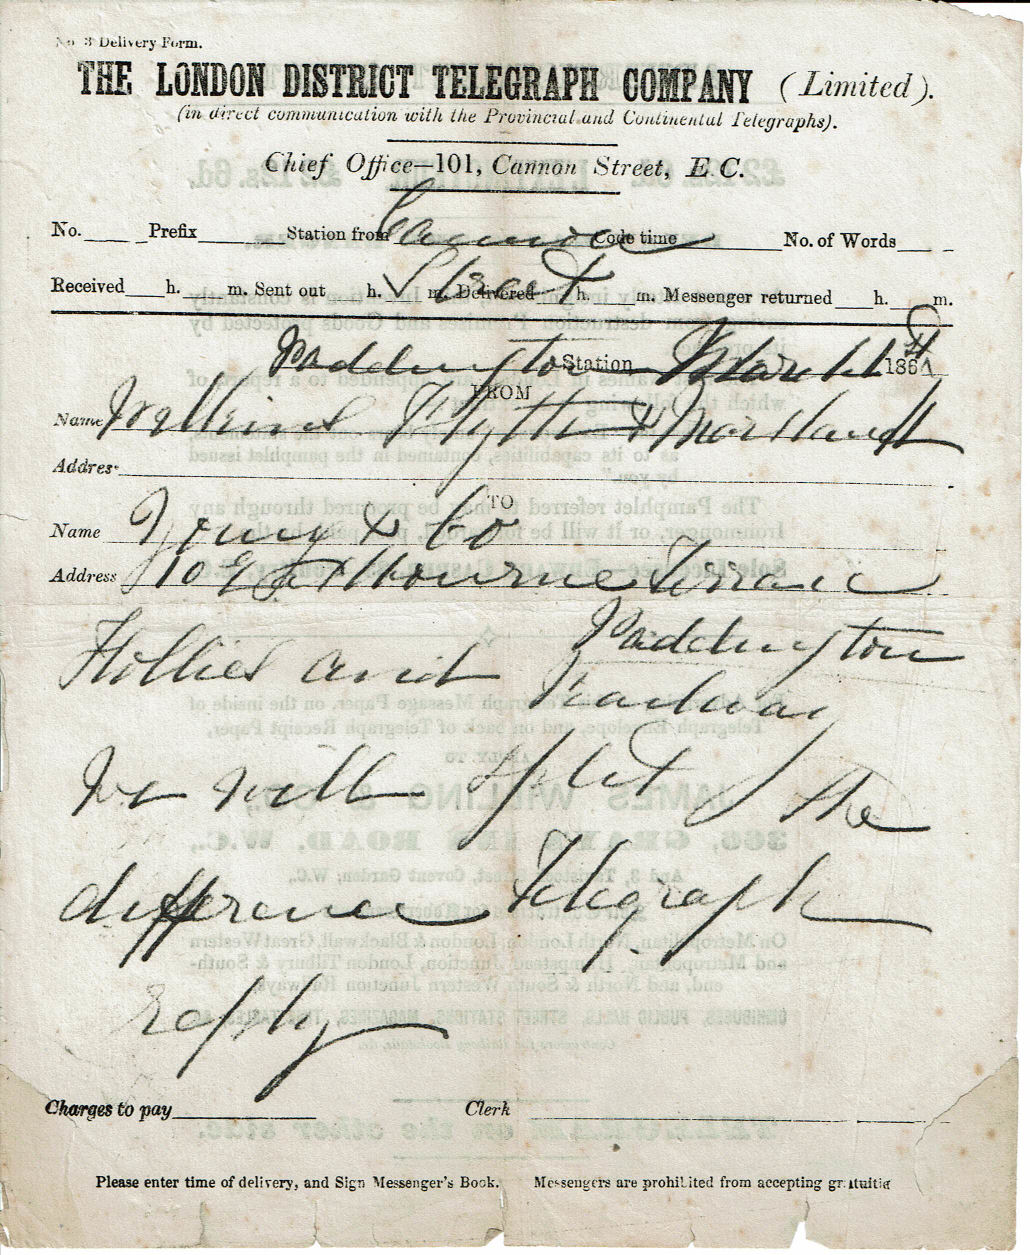 1867 LDTC Message form - Front